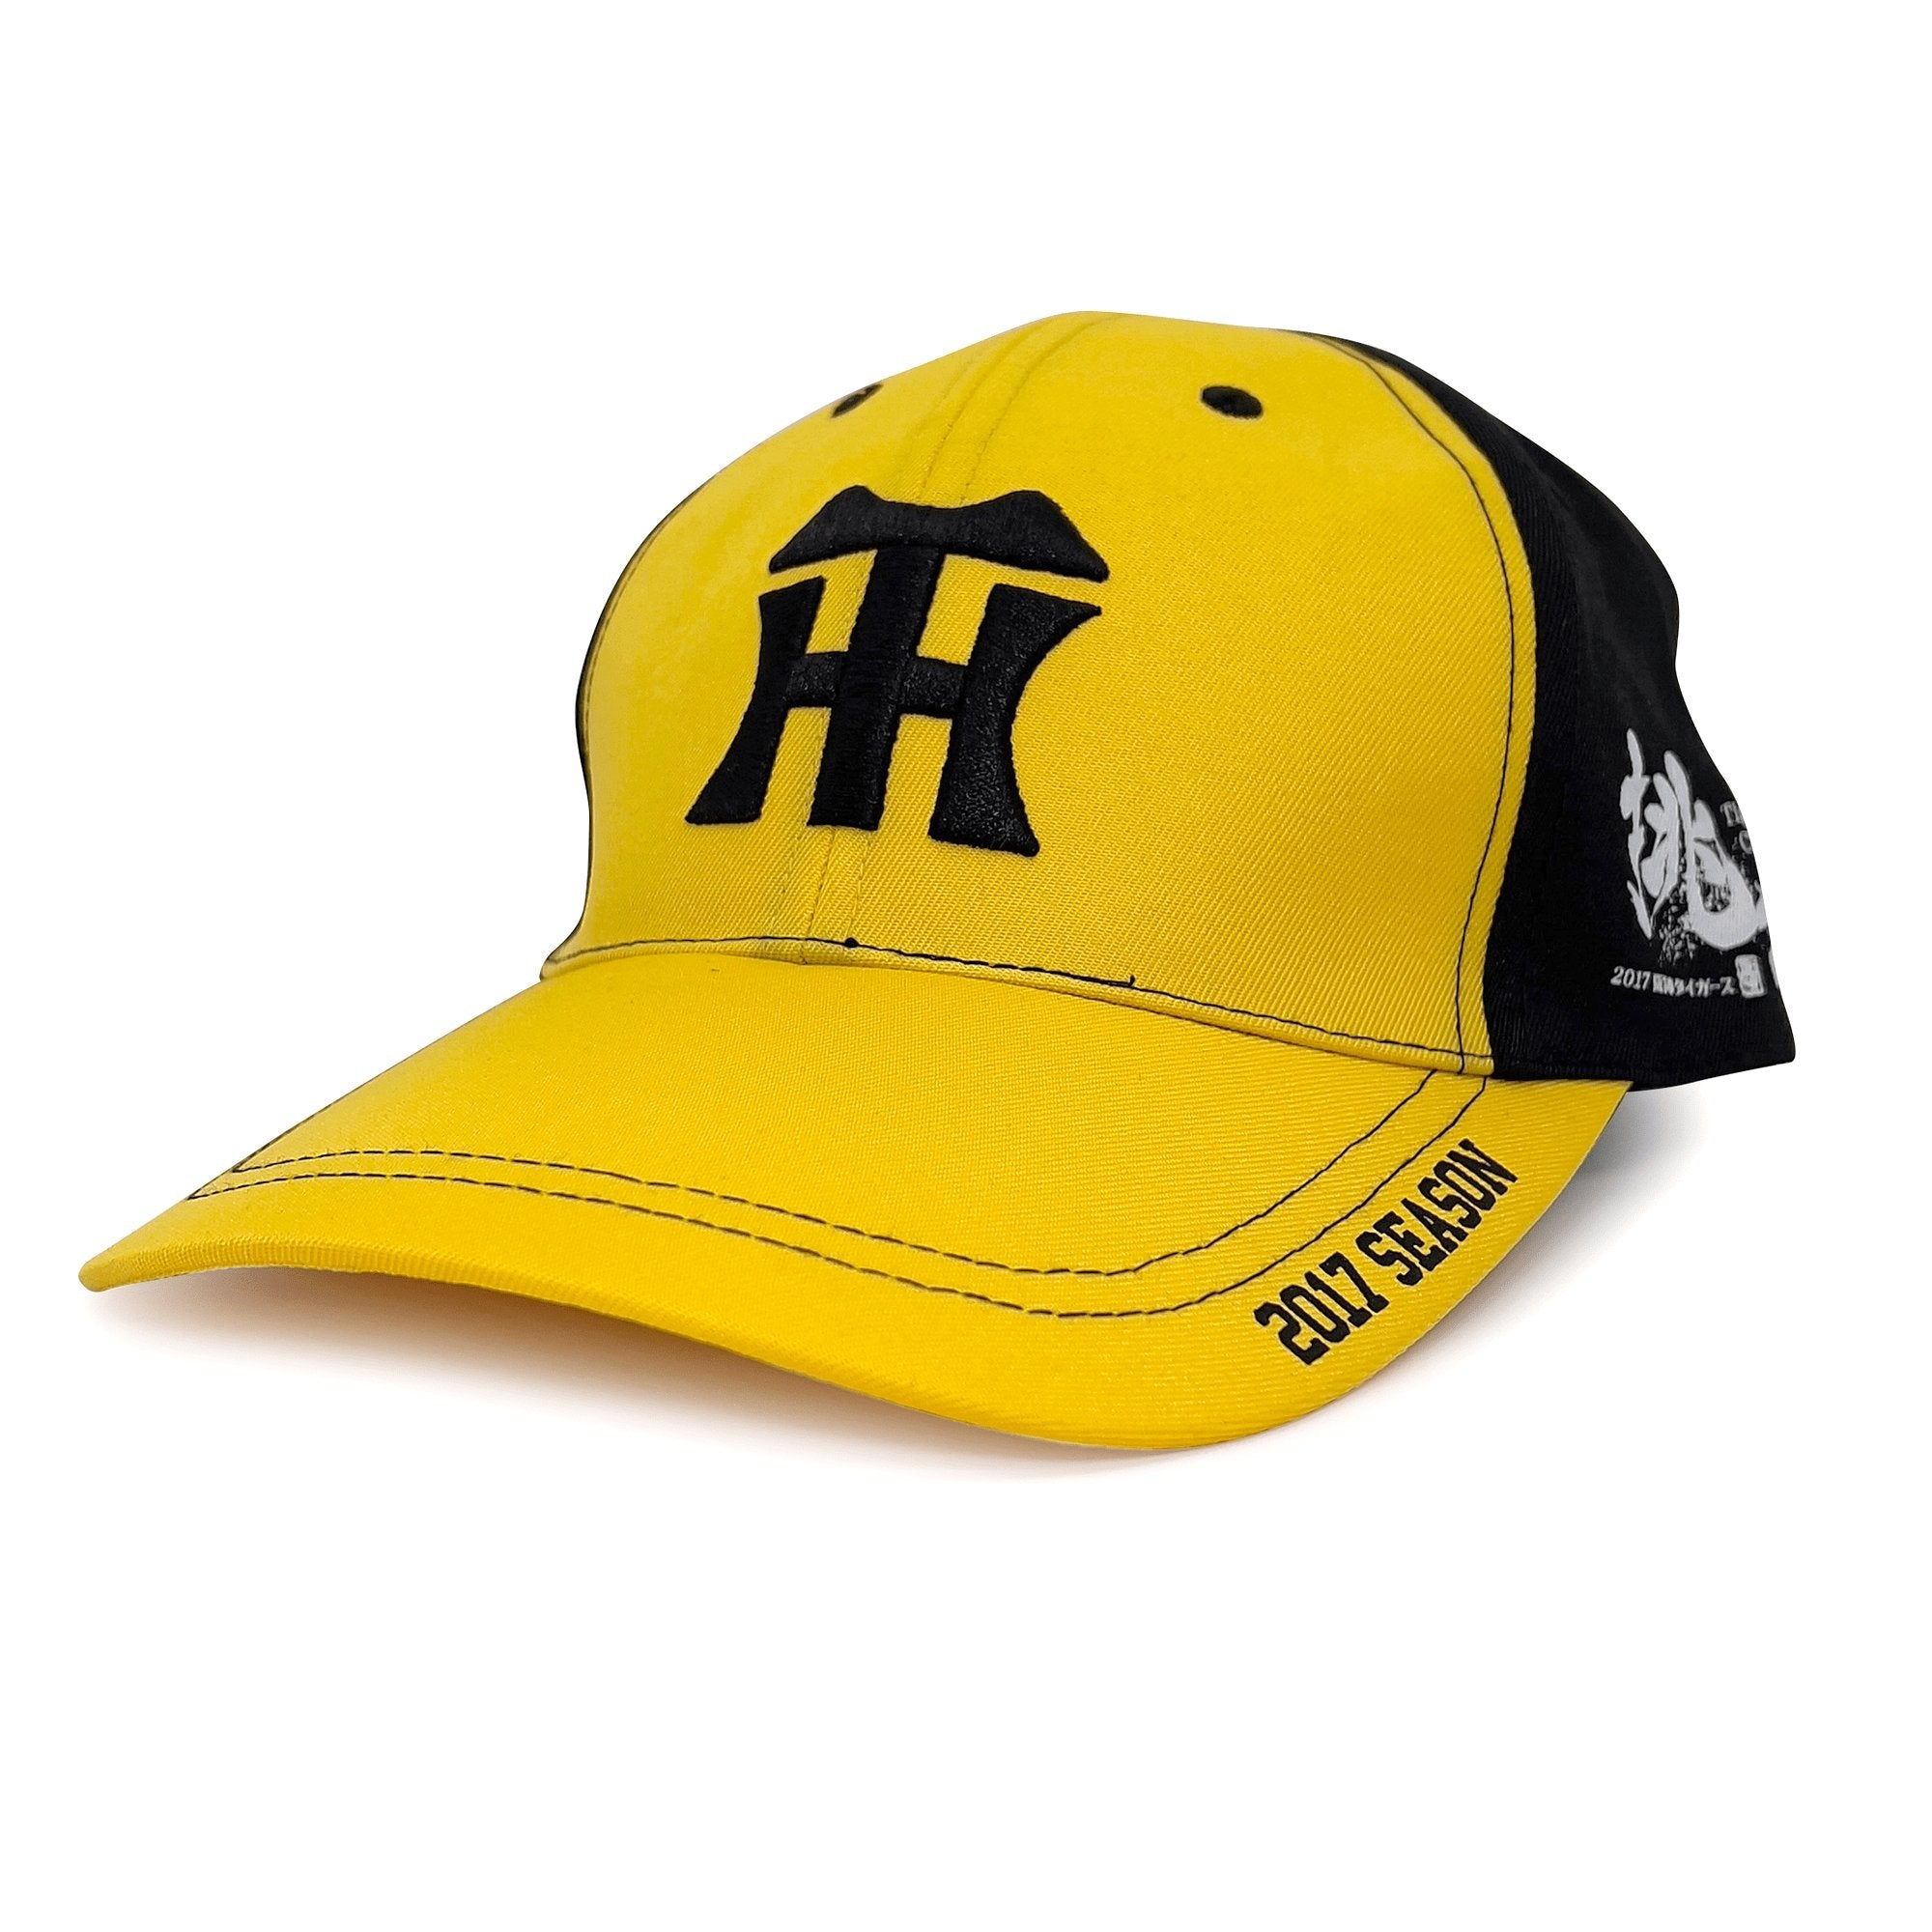 Limited Edition Japan Hanshin Tigers Hat Cap 2017 Season Yellow Black